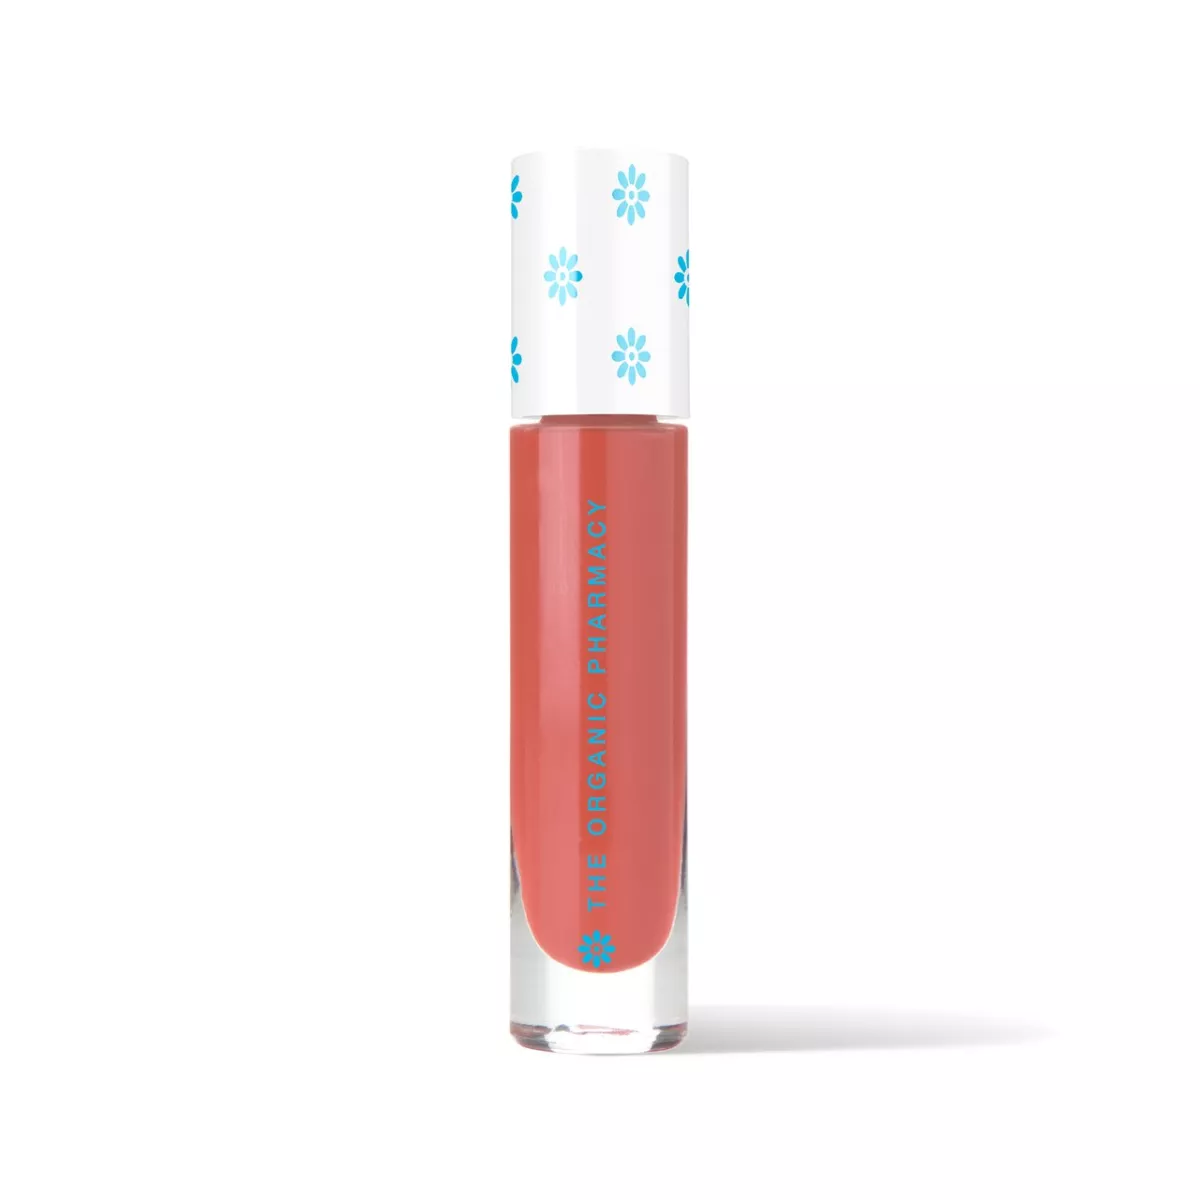 #2 - The Organic Pharmacy  -  Plumping Liquid Lipstick 5 ml Pink